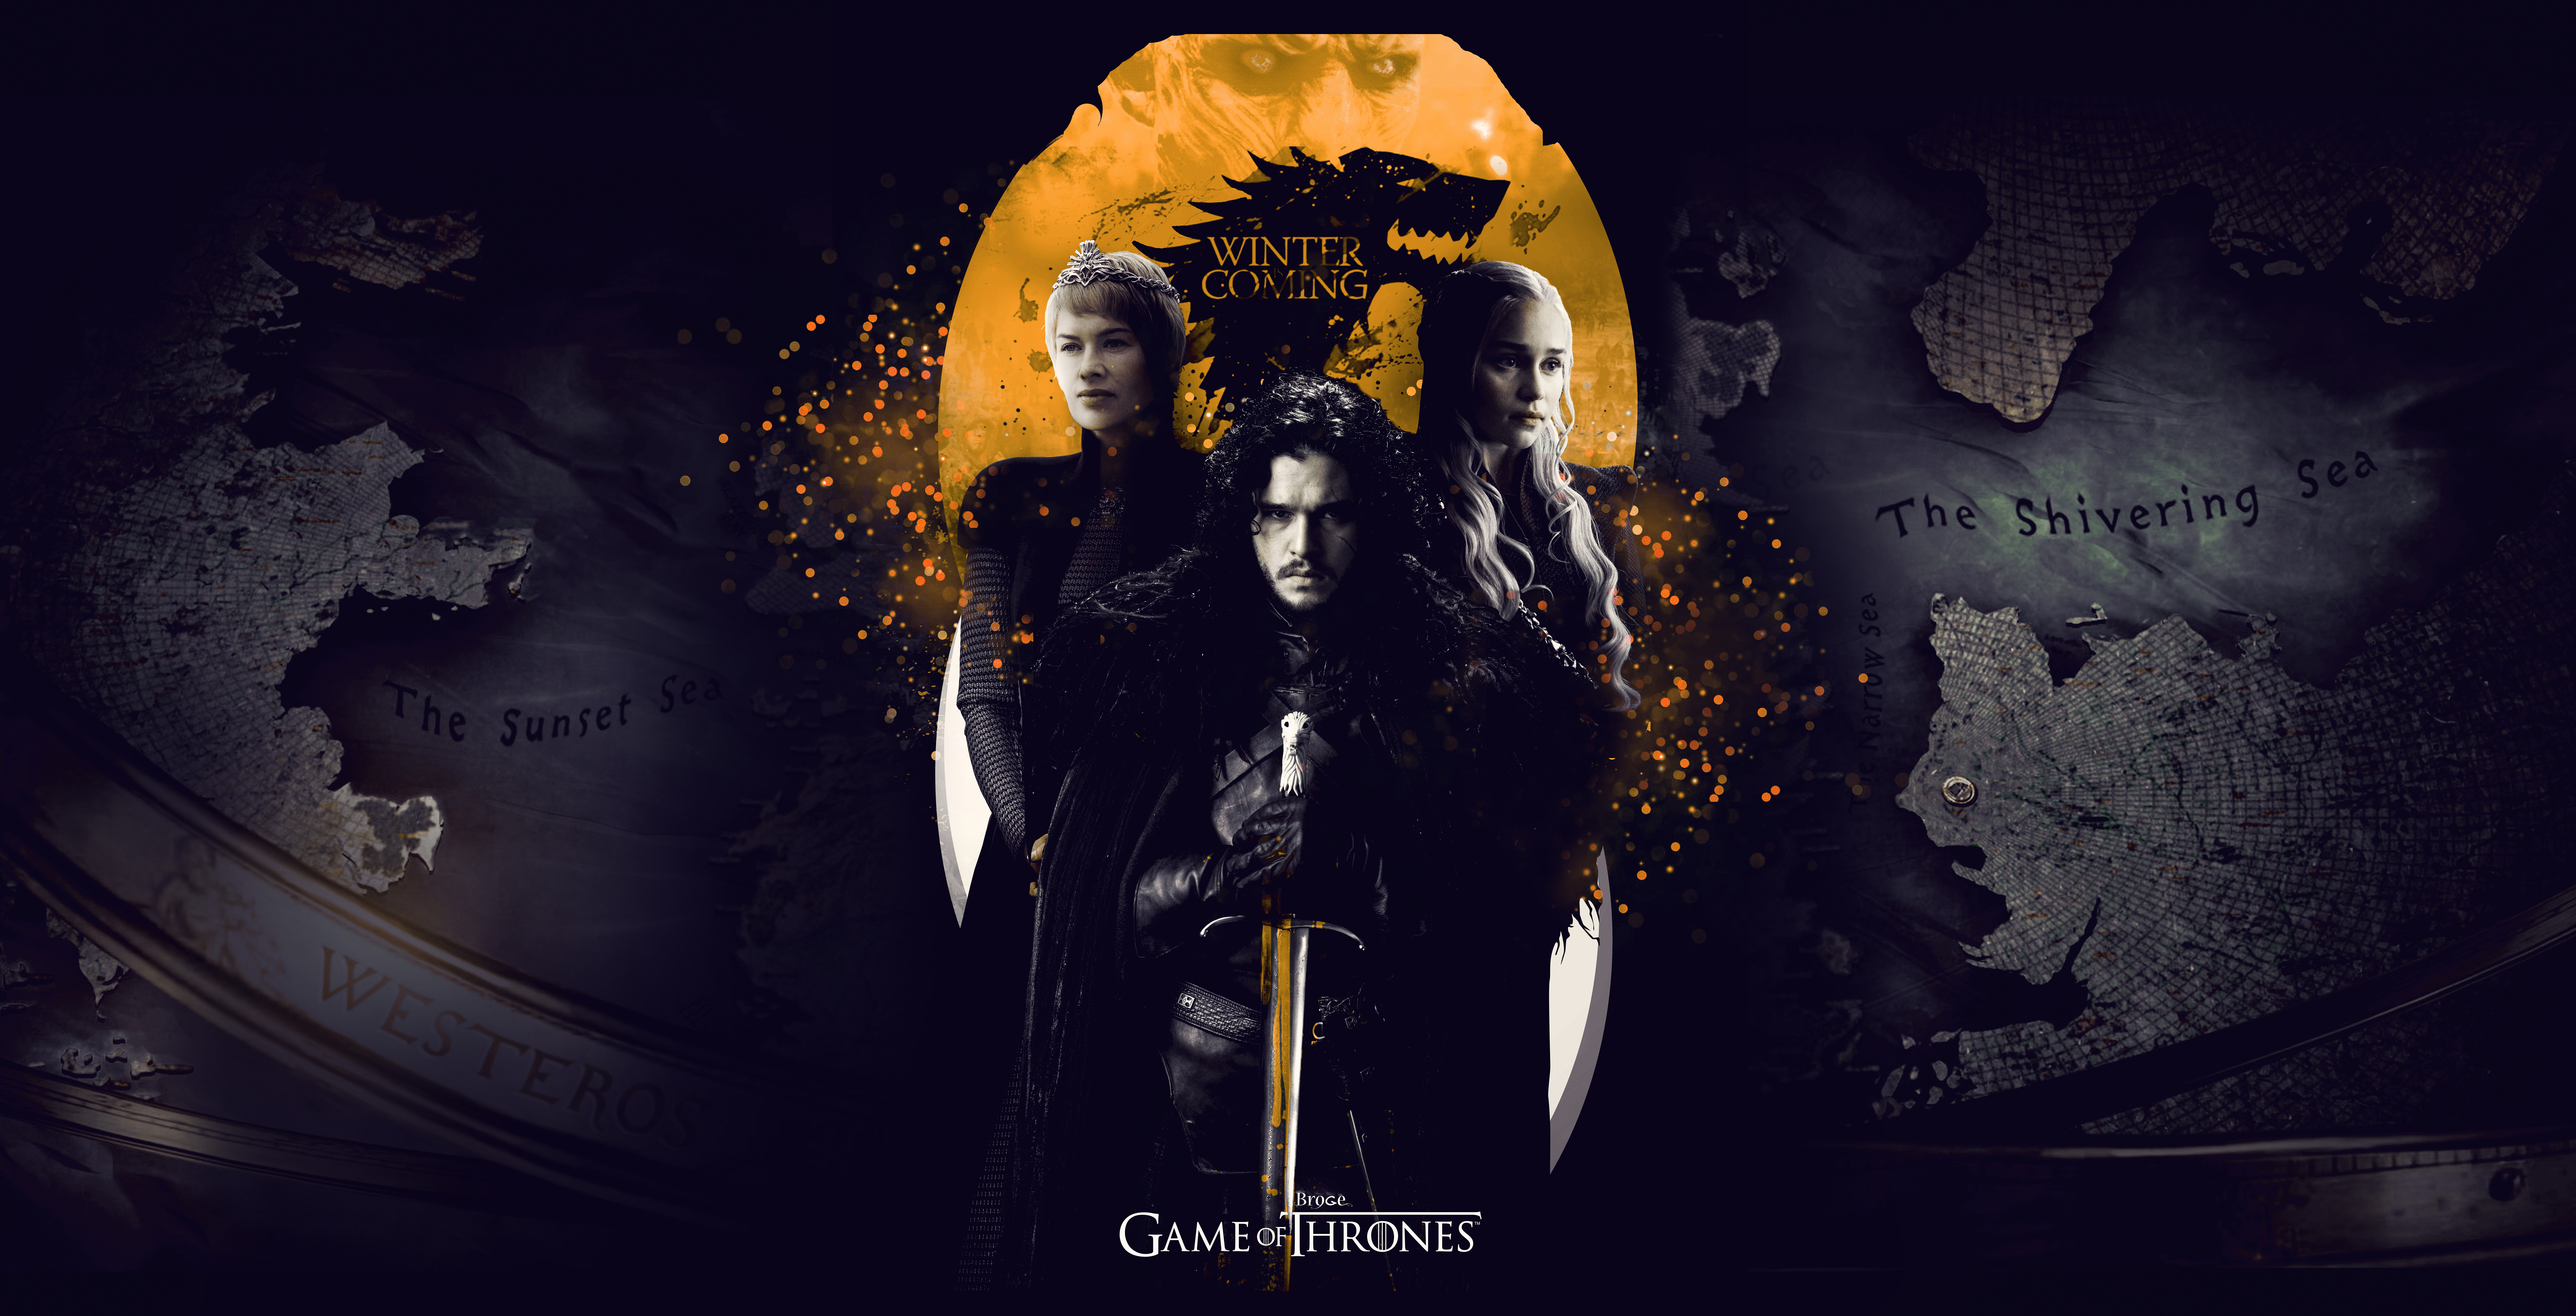 game of thrones, emilia clarke, tv show, cersei lannister, daenerys targaryen, jon snow, kit harington, lena headey